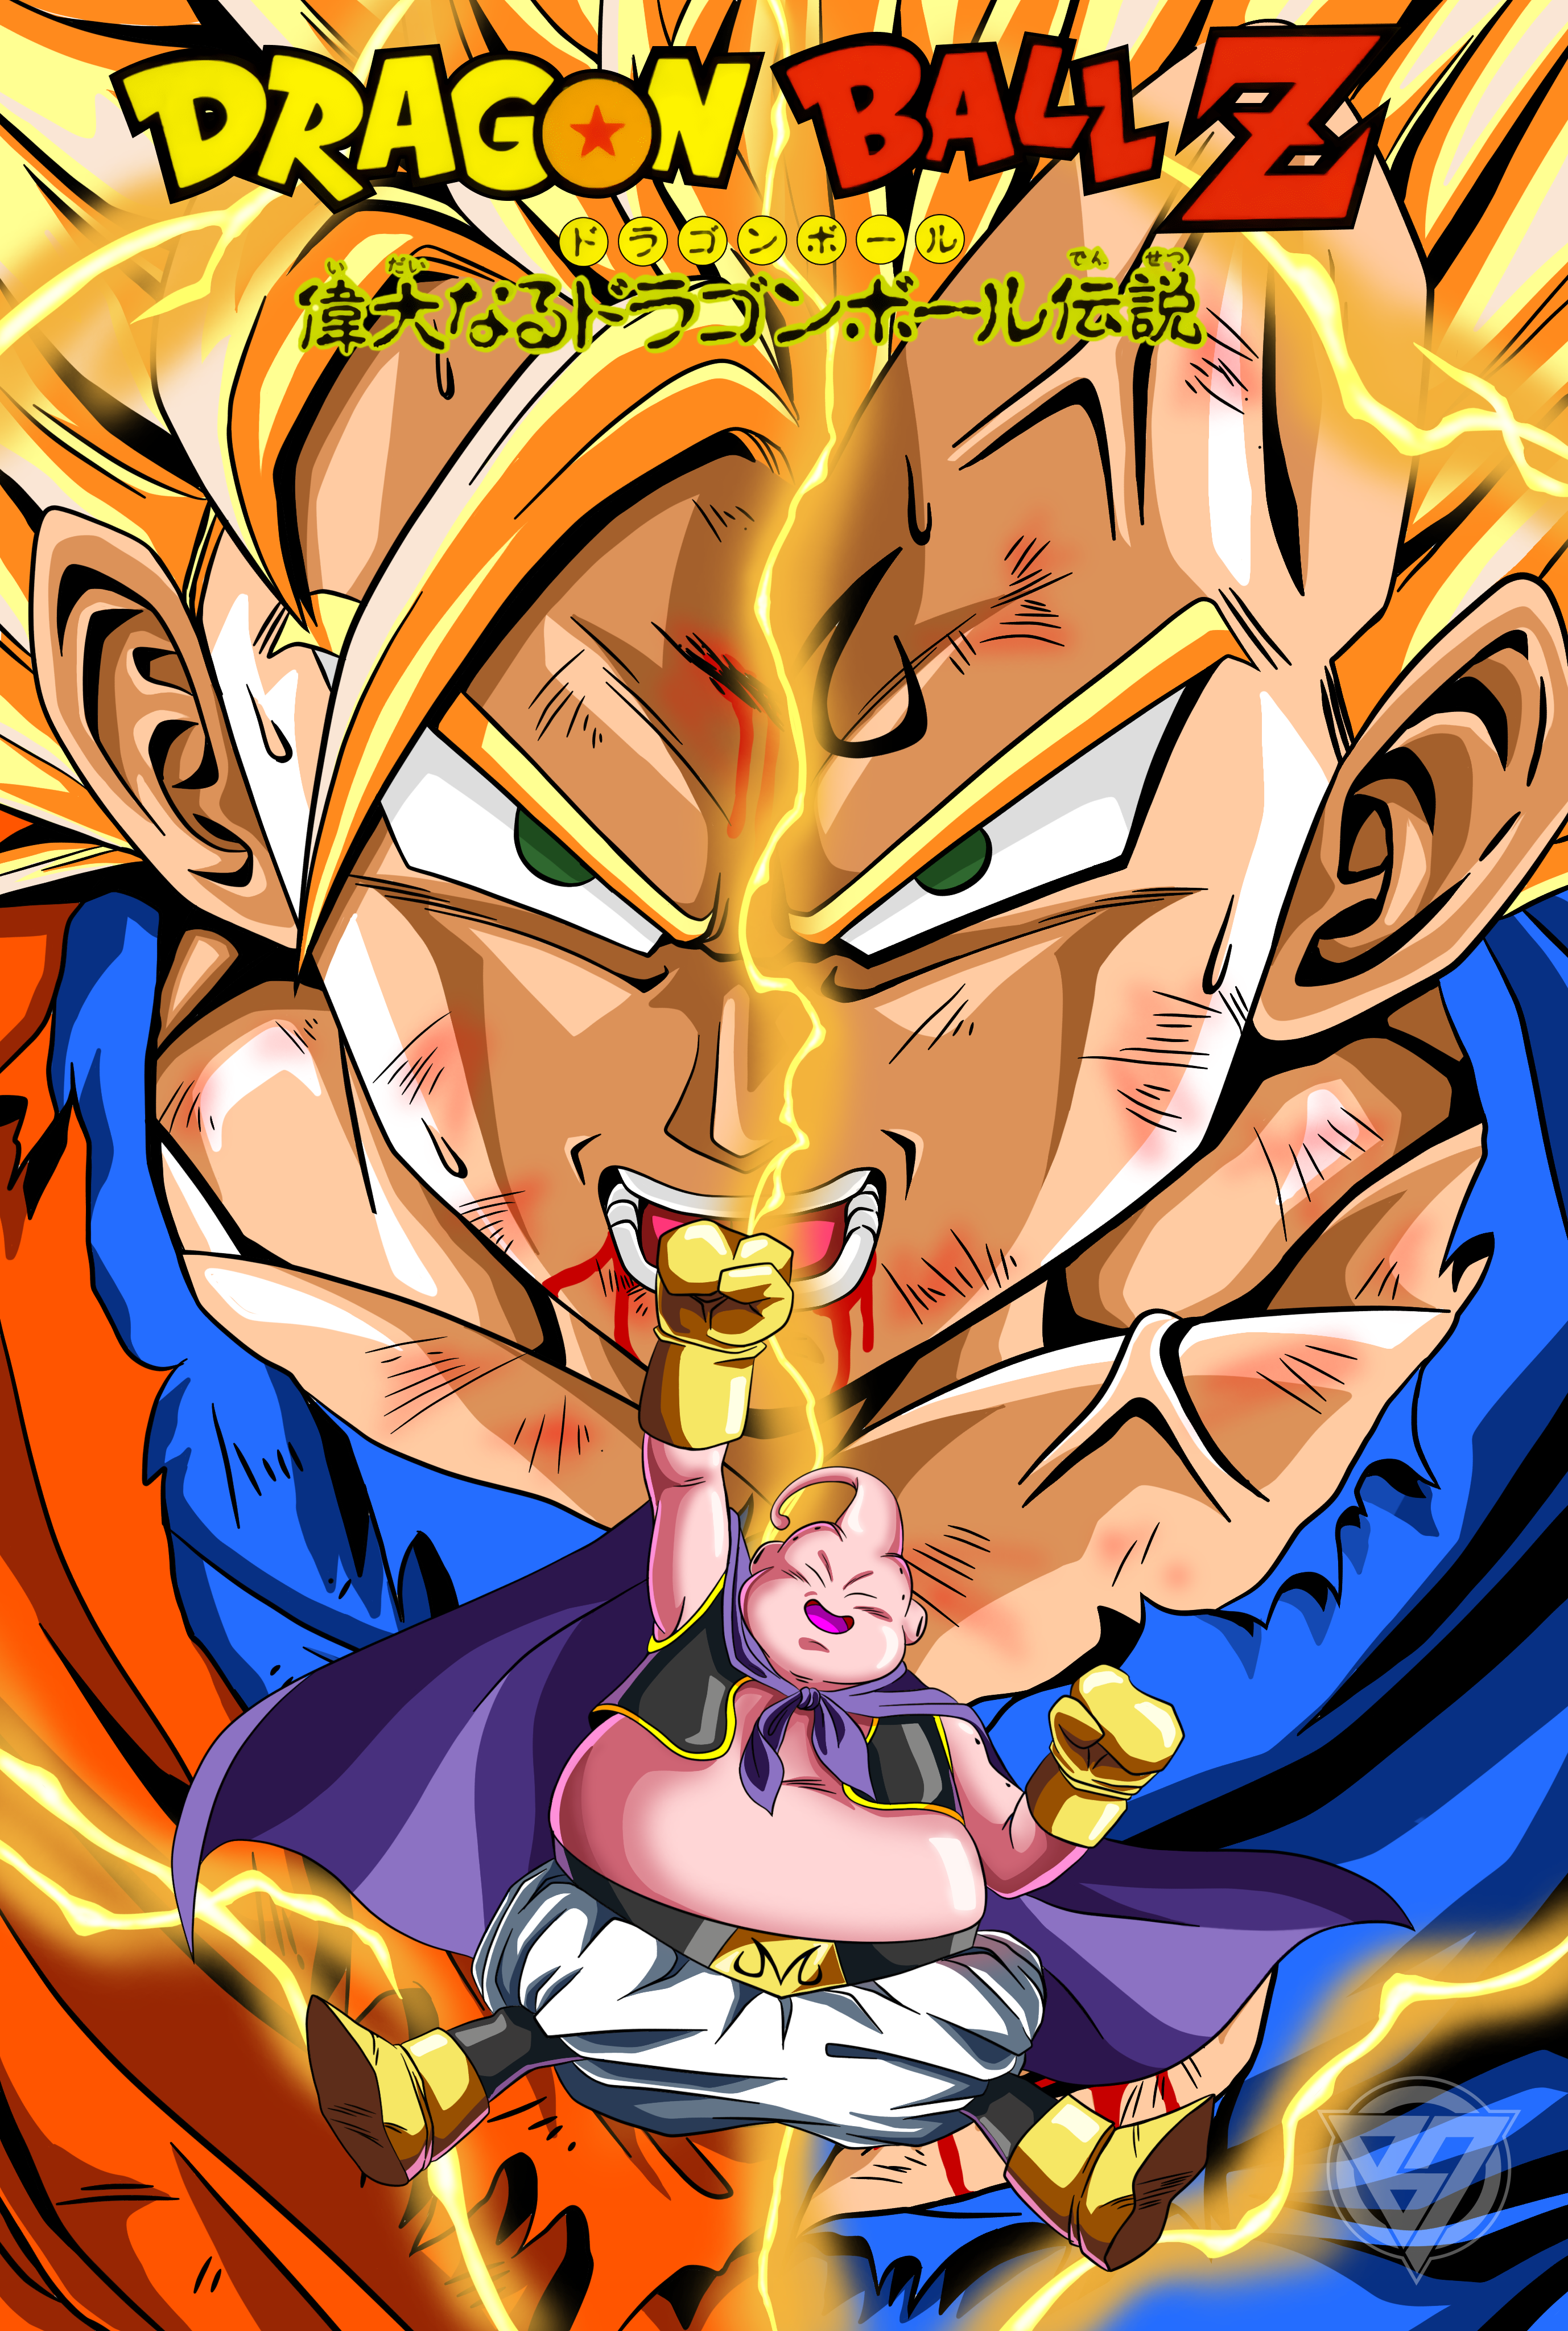 Goku vs Freeza by ZehB on DeviantArt